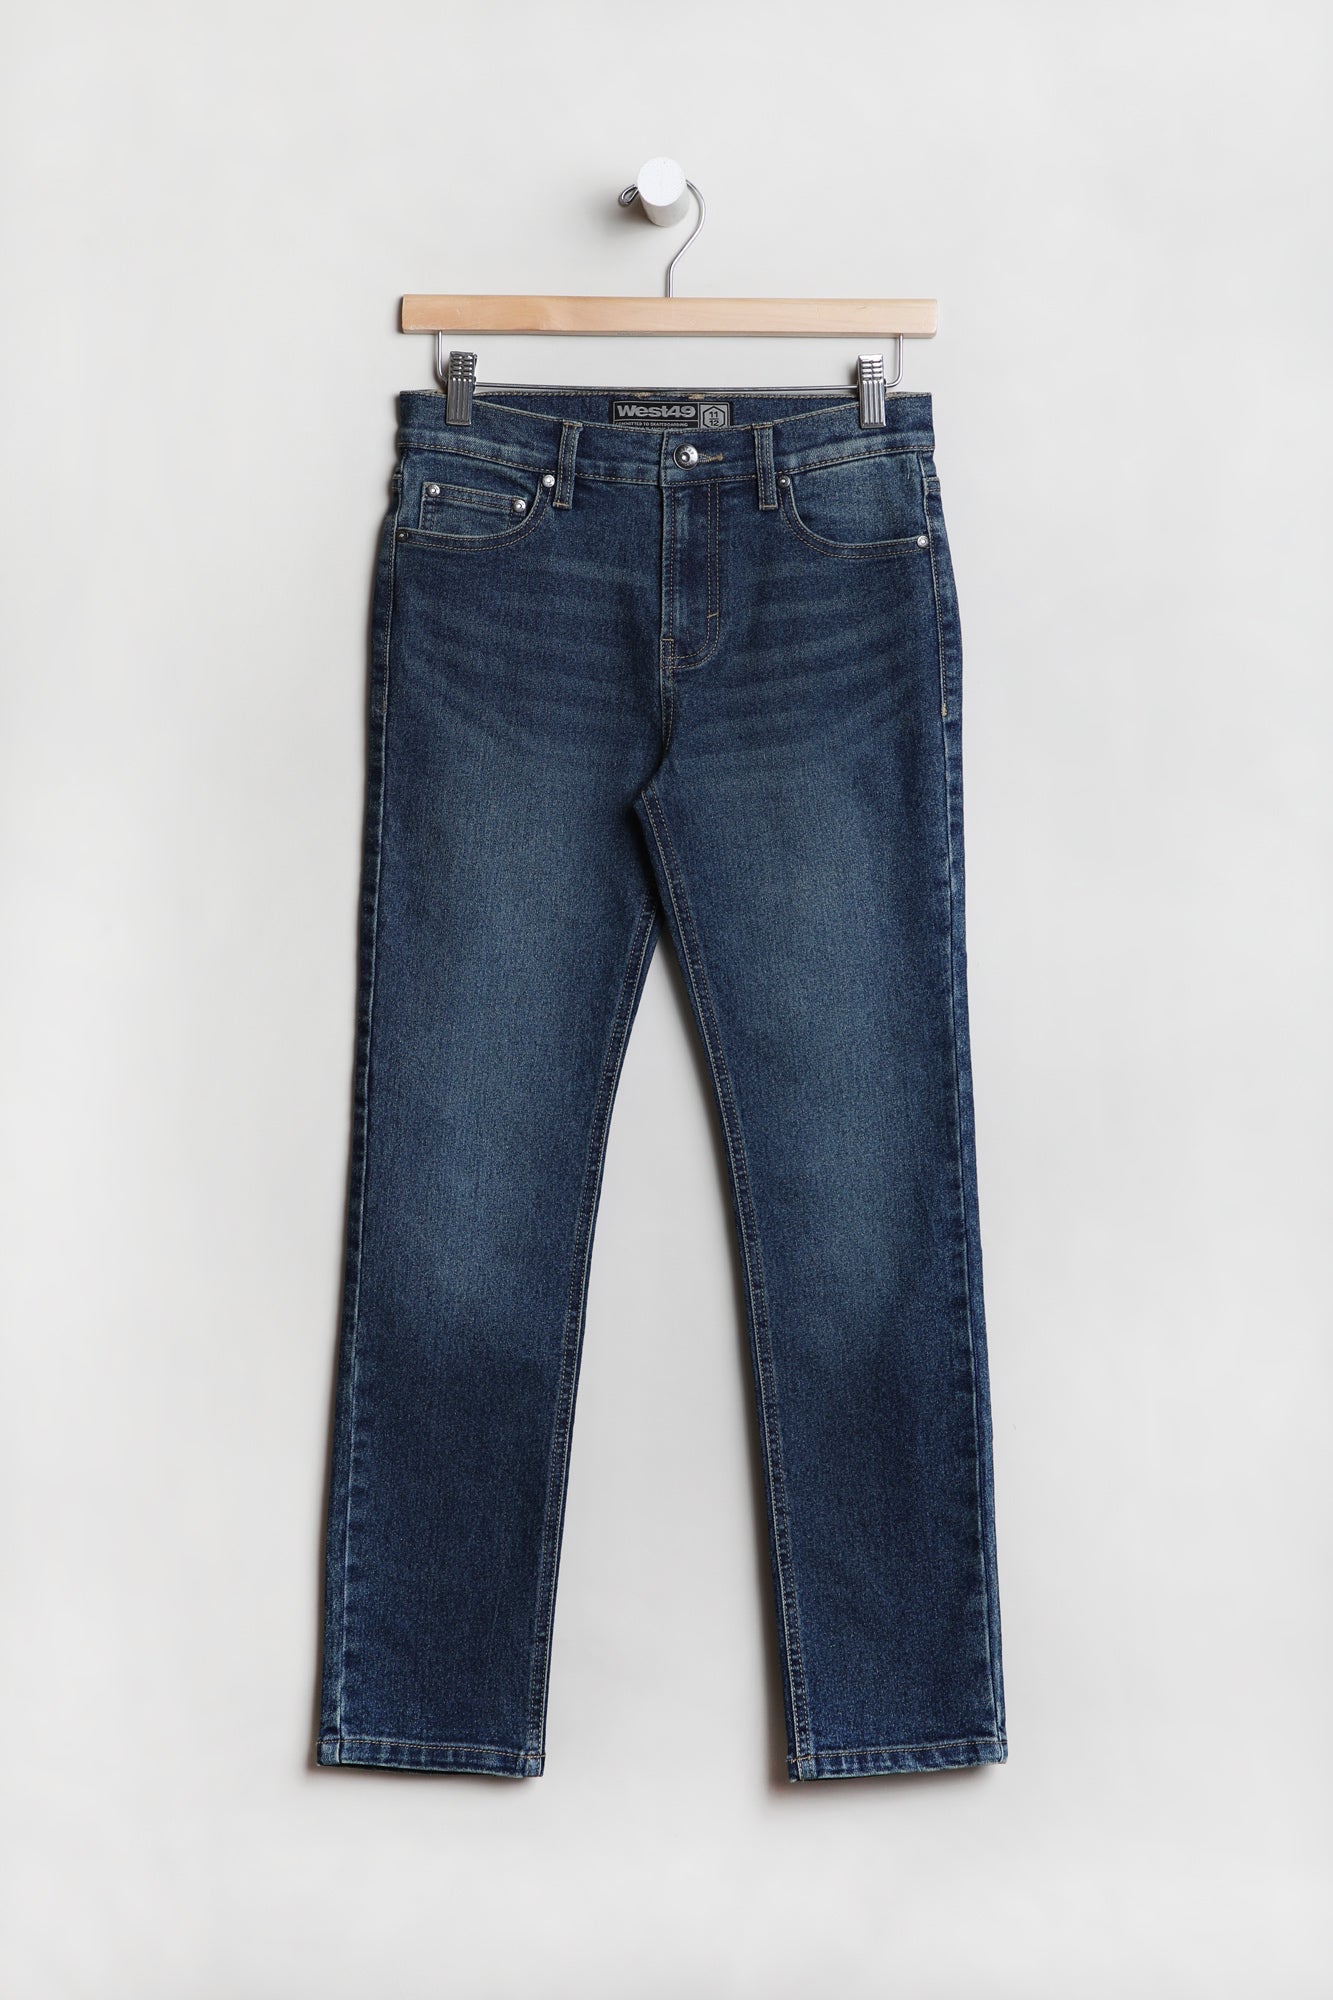 West49 Youth Dark Stone Skinny Jeans - Navy Blue /